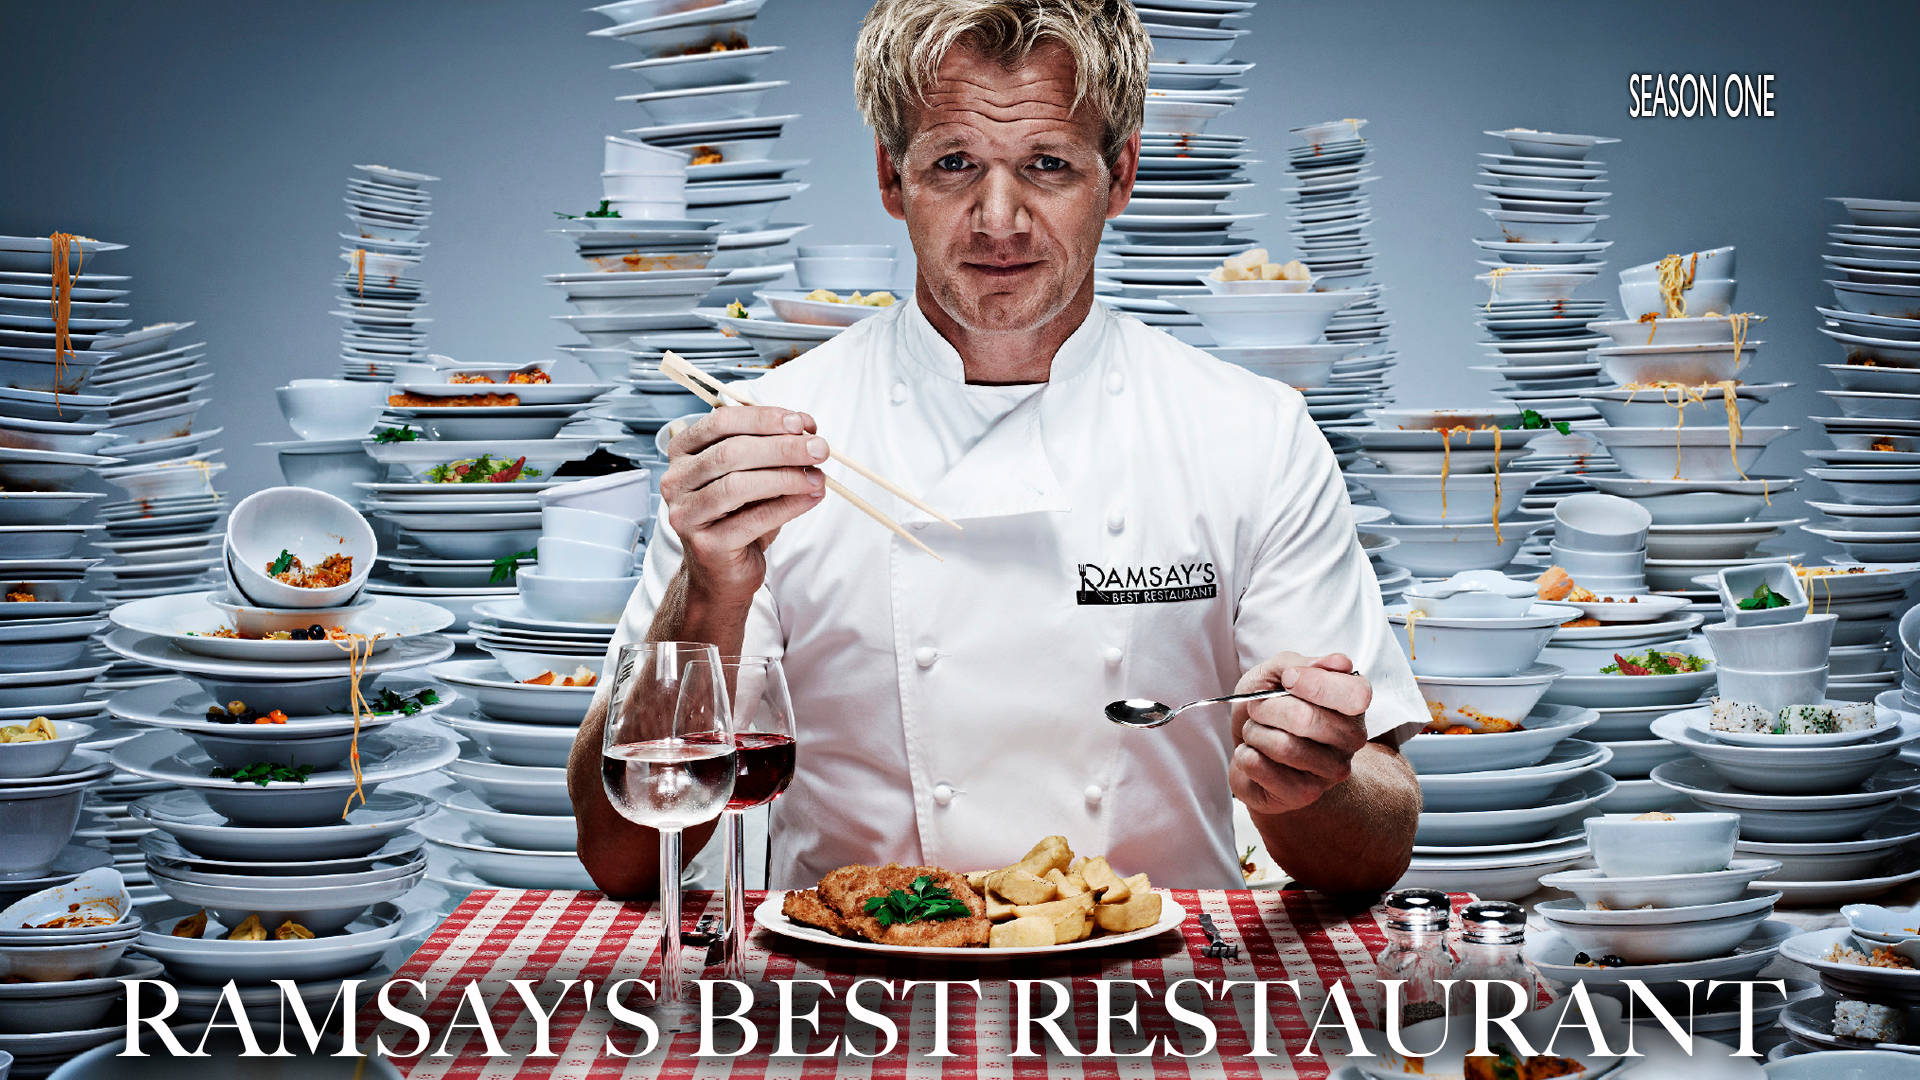 Download Gordon Ramsay Best Restaurant Wallpaper 